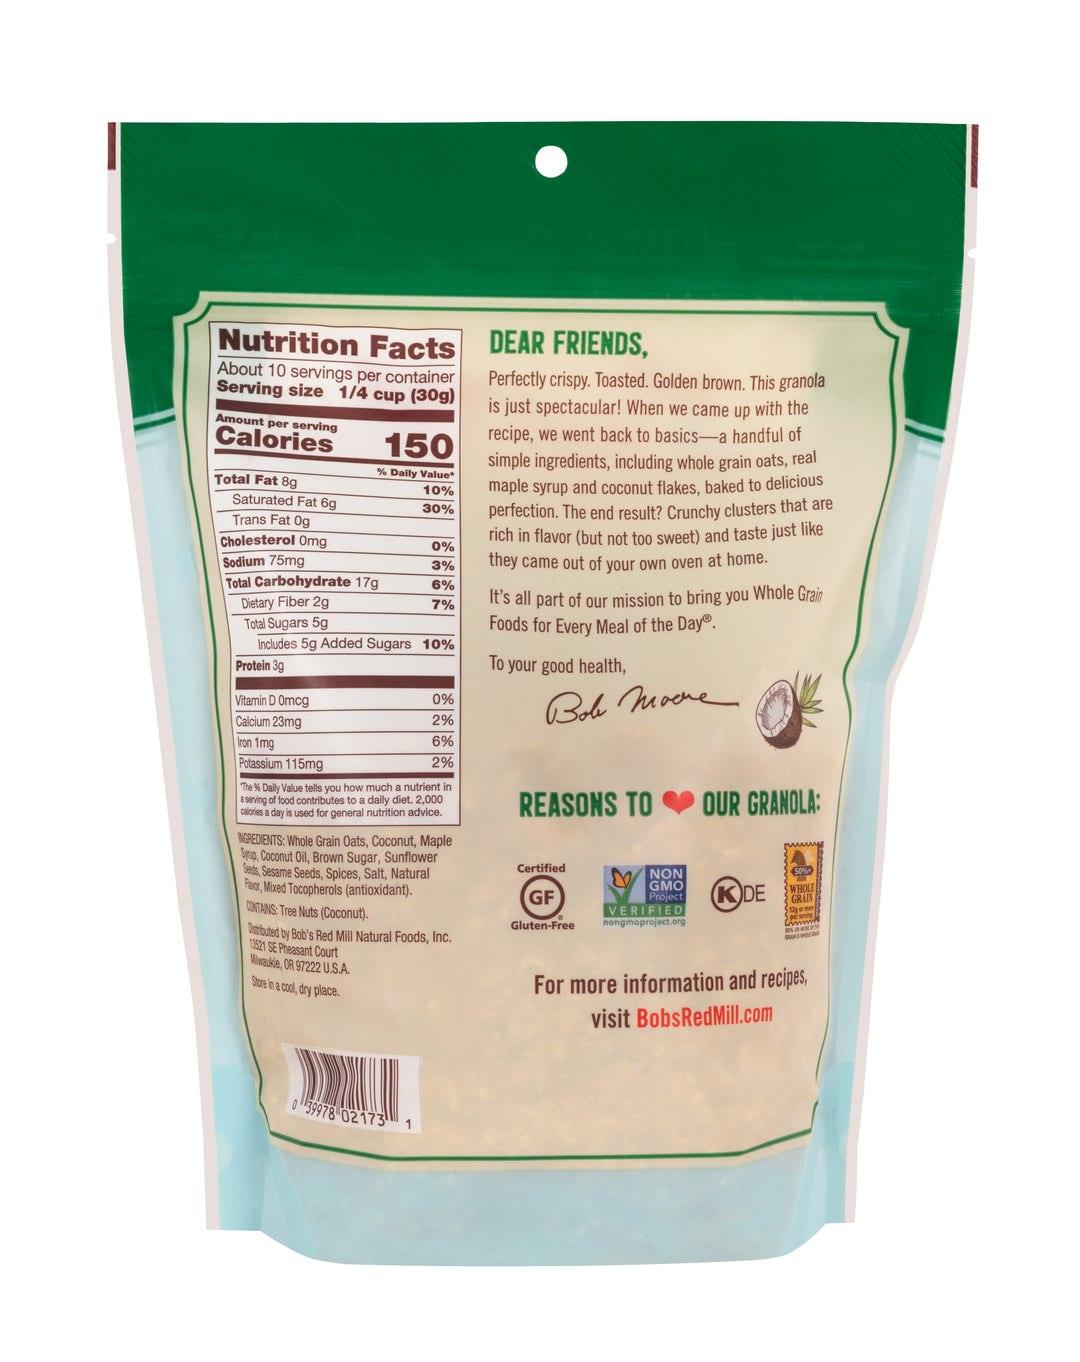 Bob's Red Mill Natural Foods Inc Coconut Spice Granola-11 oz.-6/Case